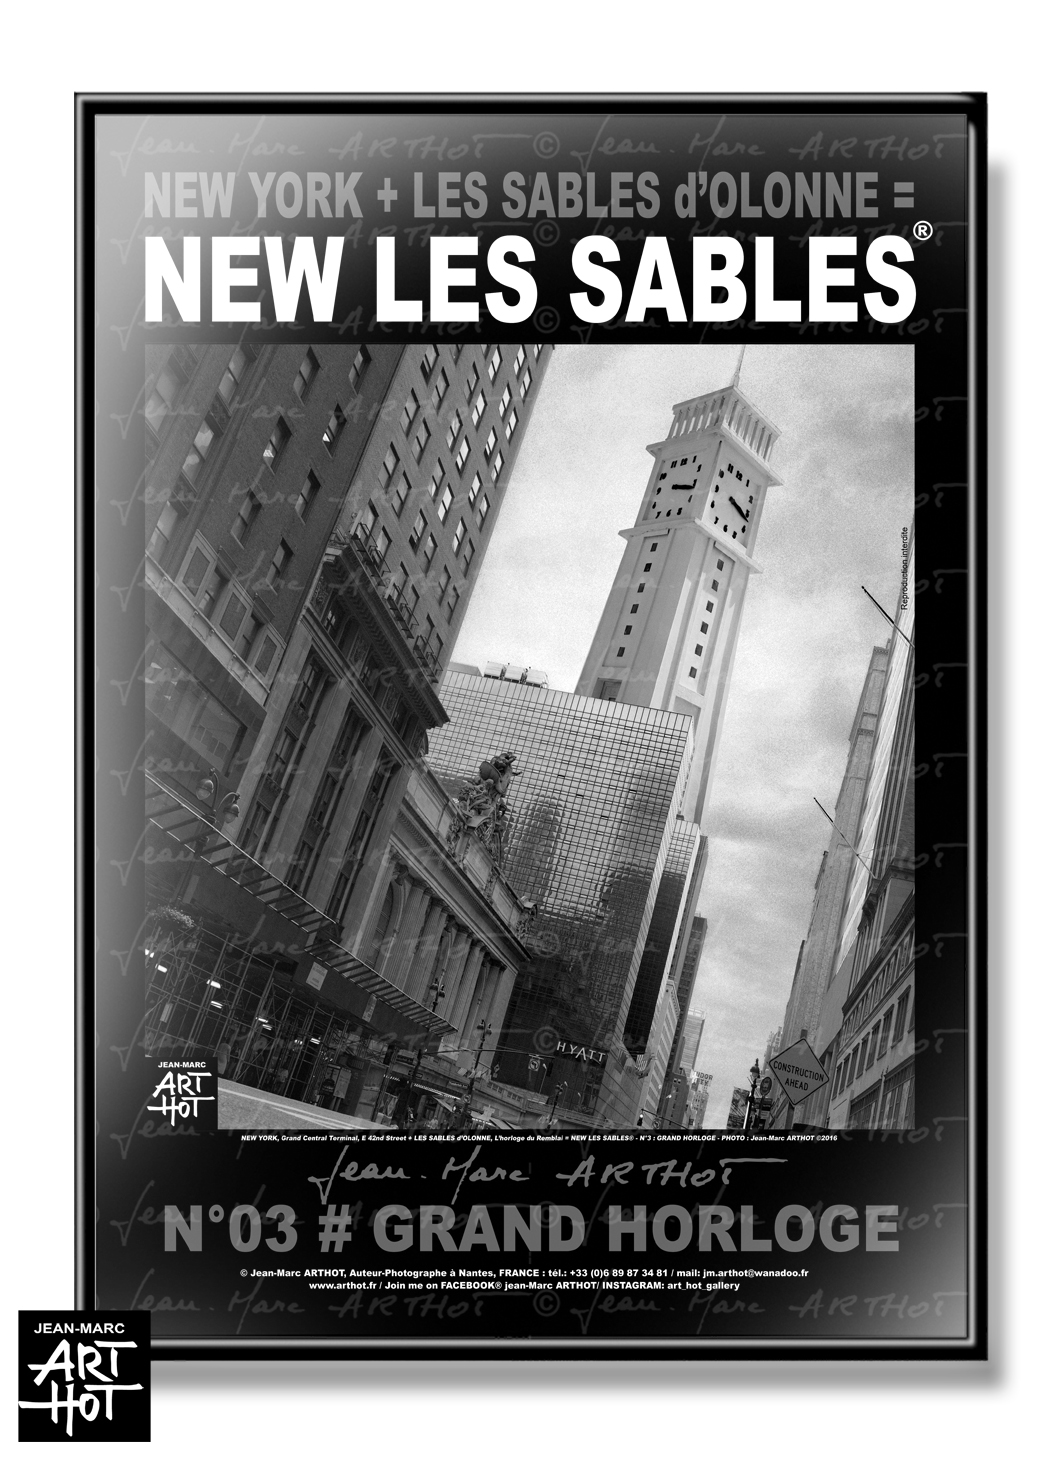 arthot-photo-art-b&amp;w-new-york-vendee-sables-olonne-newlessables-003-horloge-grand-central-AFFICHE